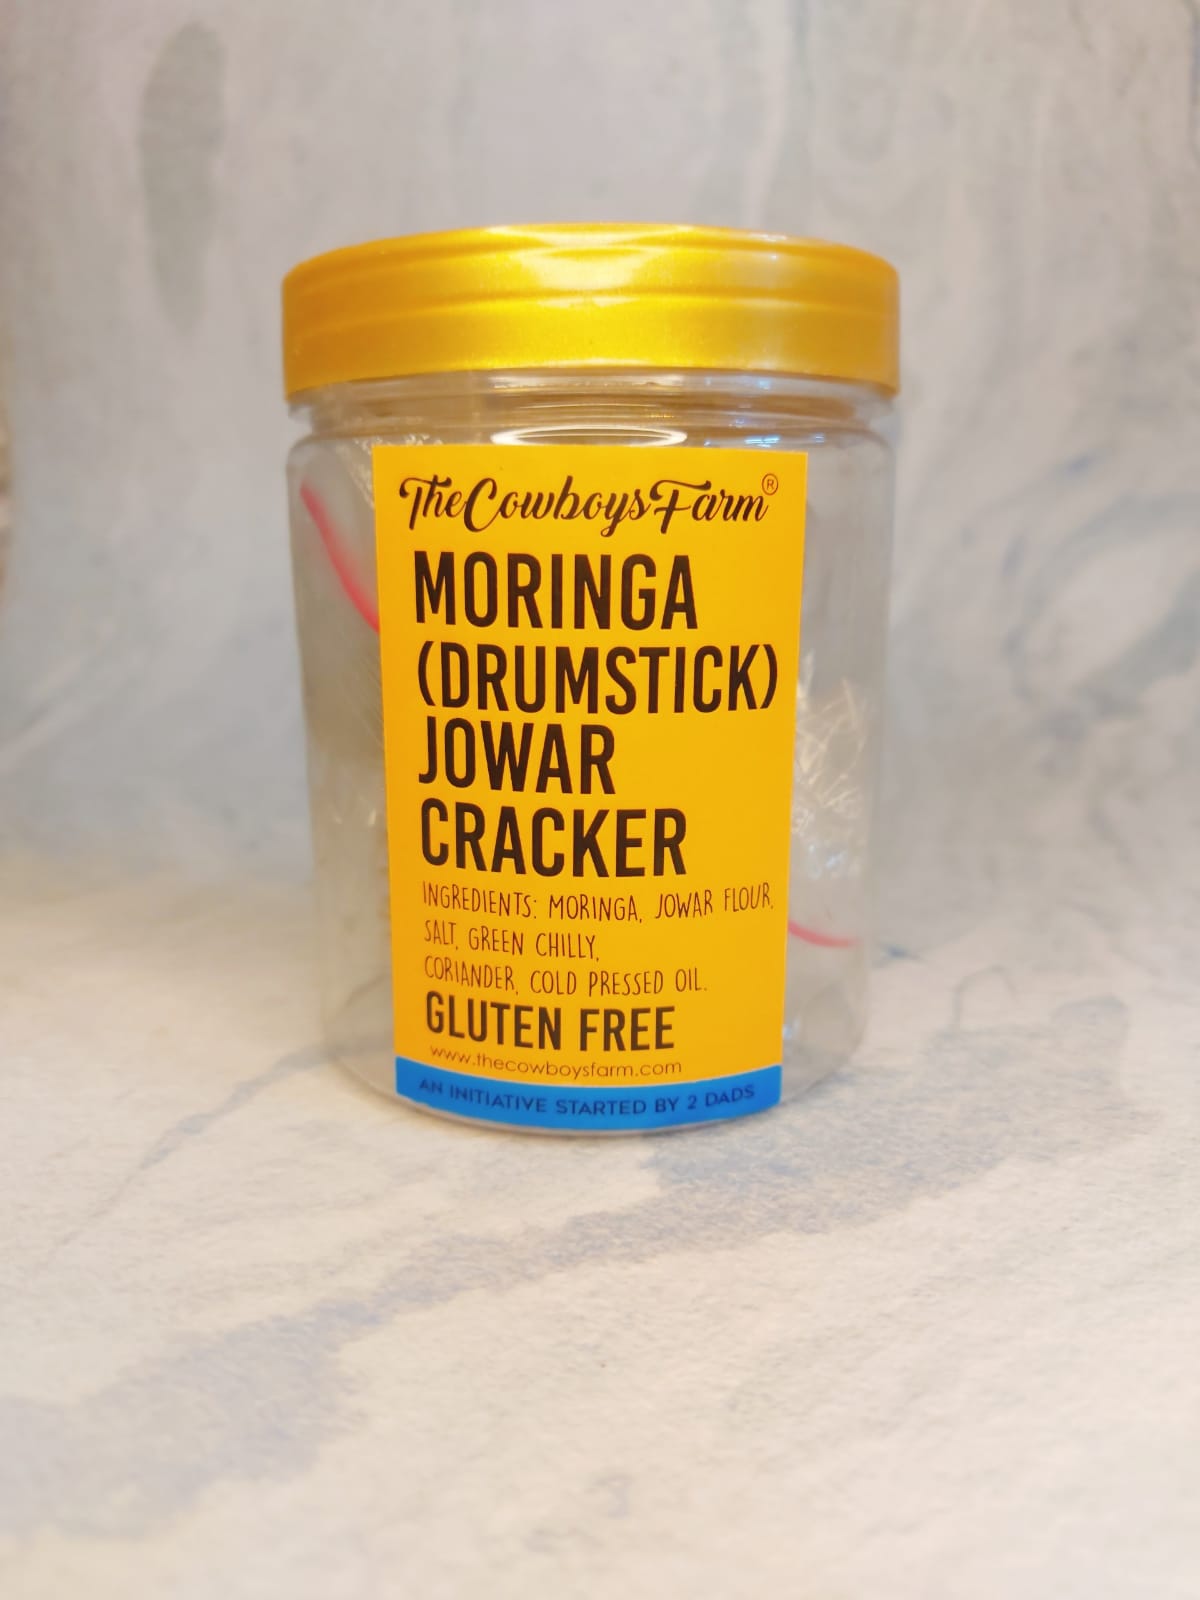 Moringa (Drumstick) Jowar Cracker – The Cowboys Farm